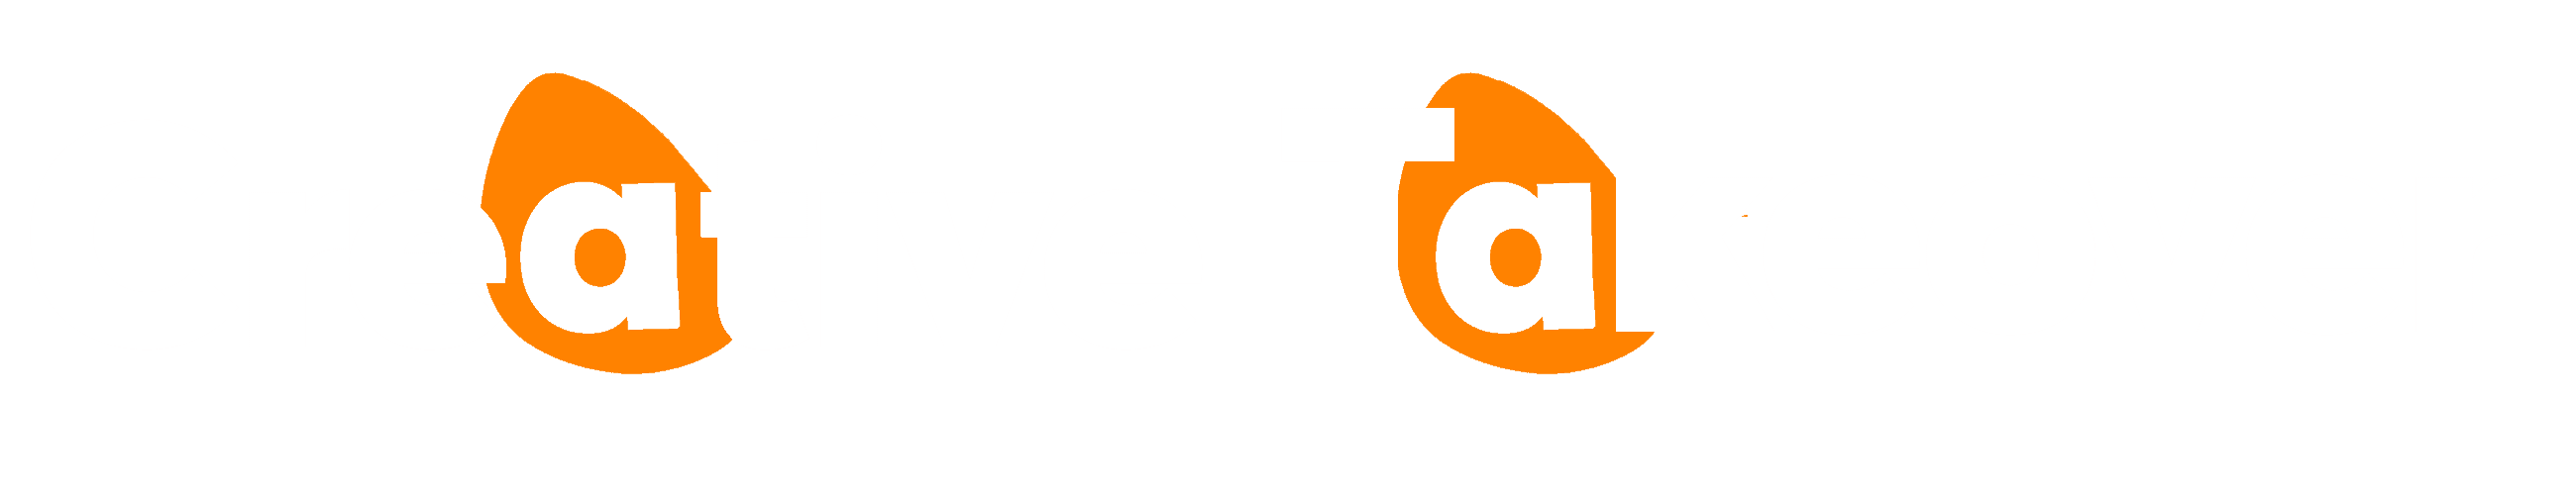 Creative Takeover logo - thin WHITE landscape